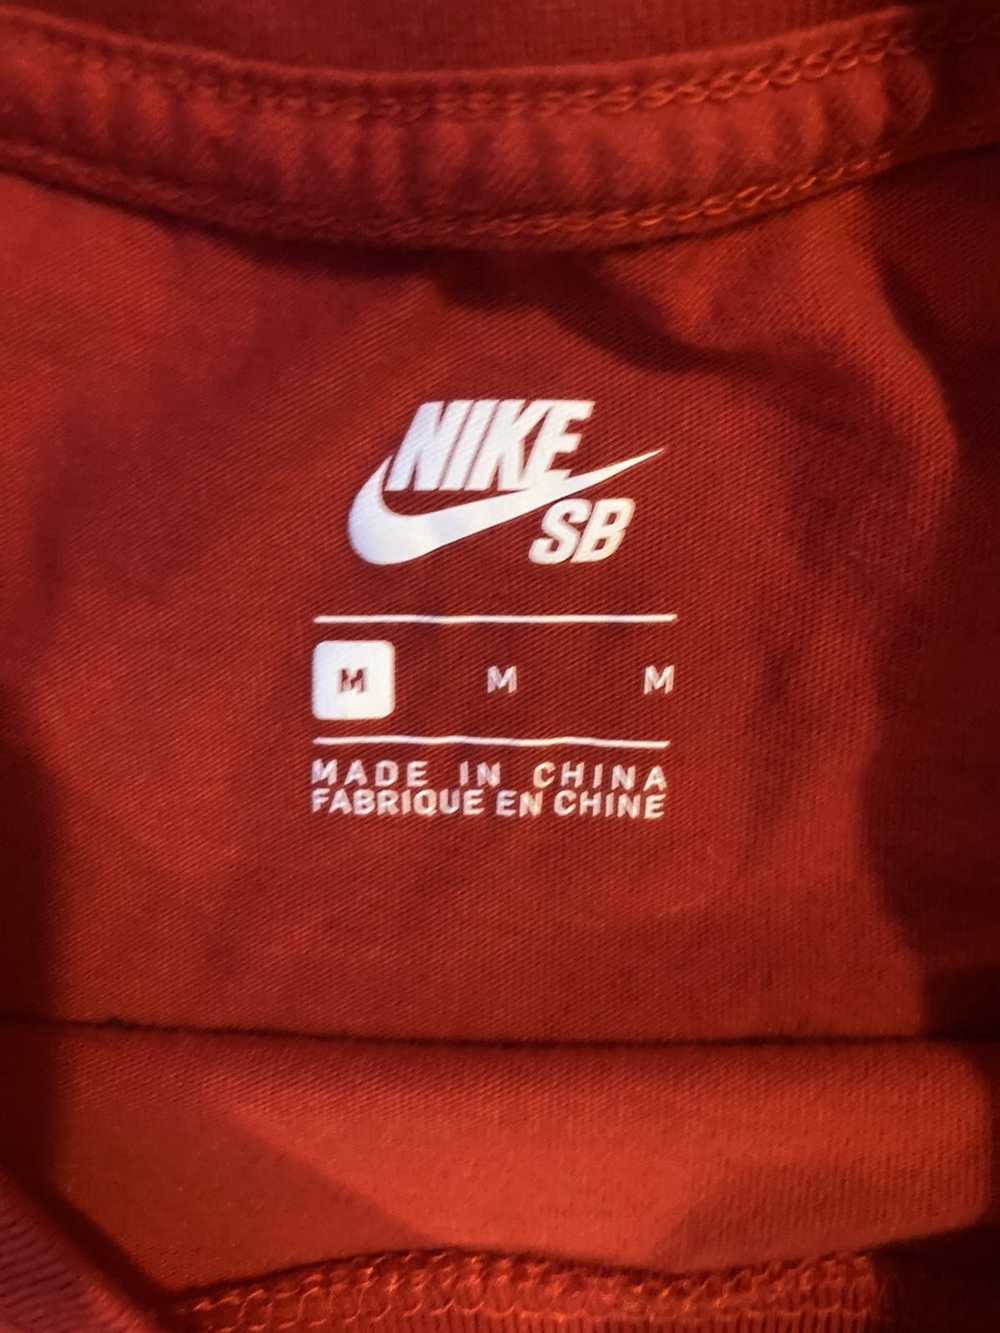 Nike Nike sb t shirt - image 2